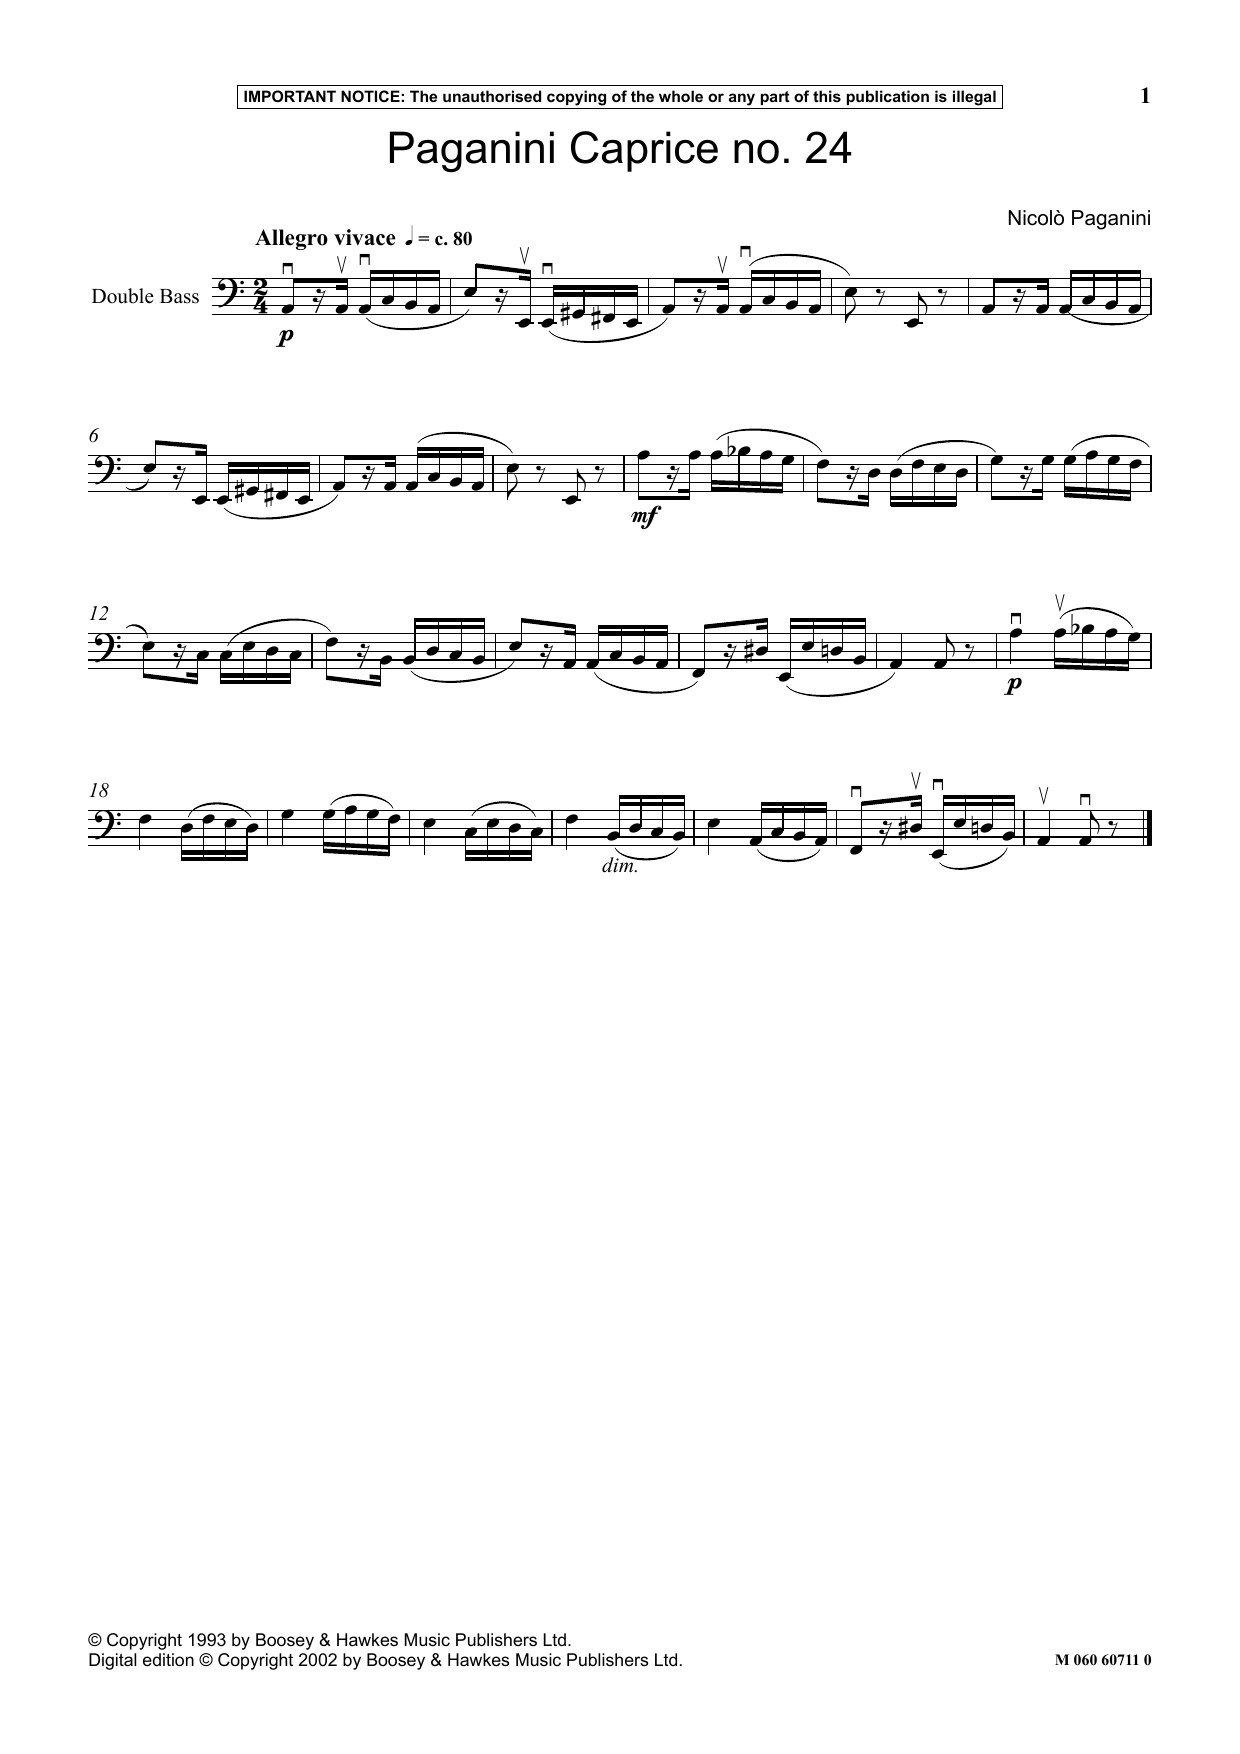 Nicolo Paganini Paganini Caprice No. 24 Sheet Music Notes & Chords for Instrumental Solo - Download or Print PDF